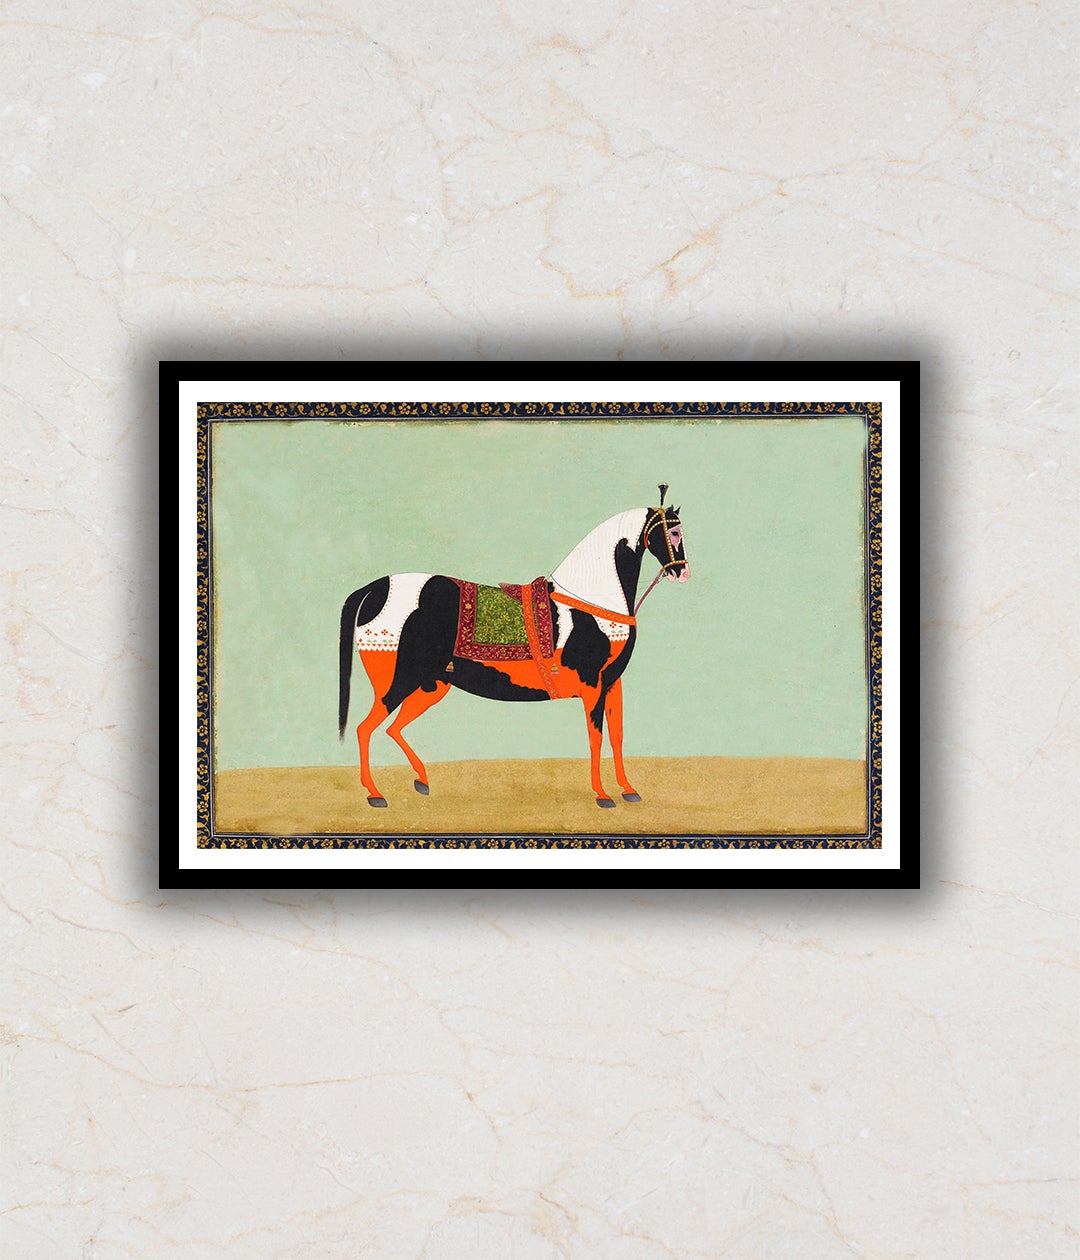 A Horse Artwork Painting For Home Wall Art DŽcor